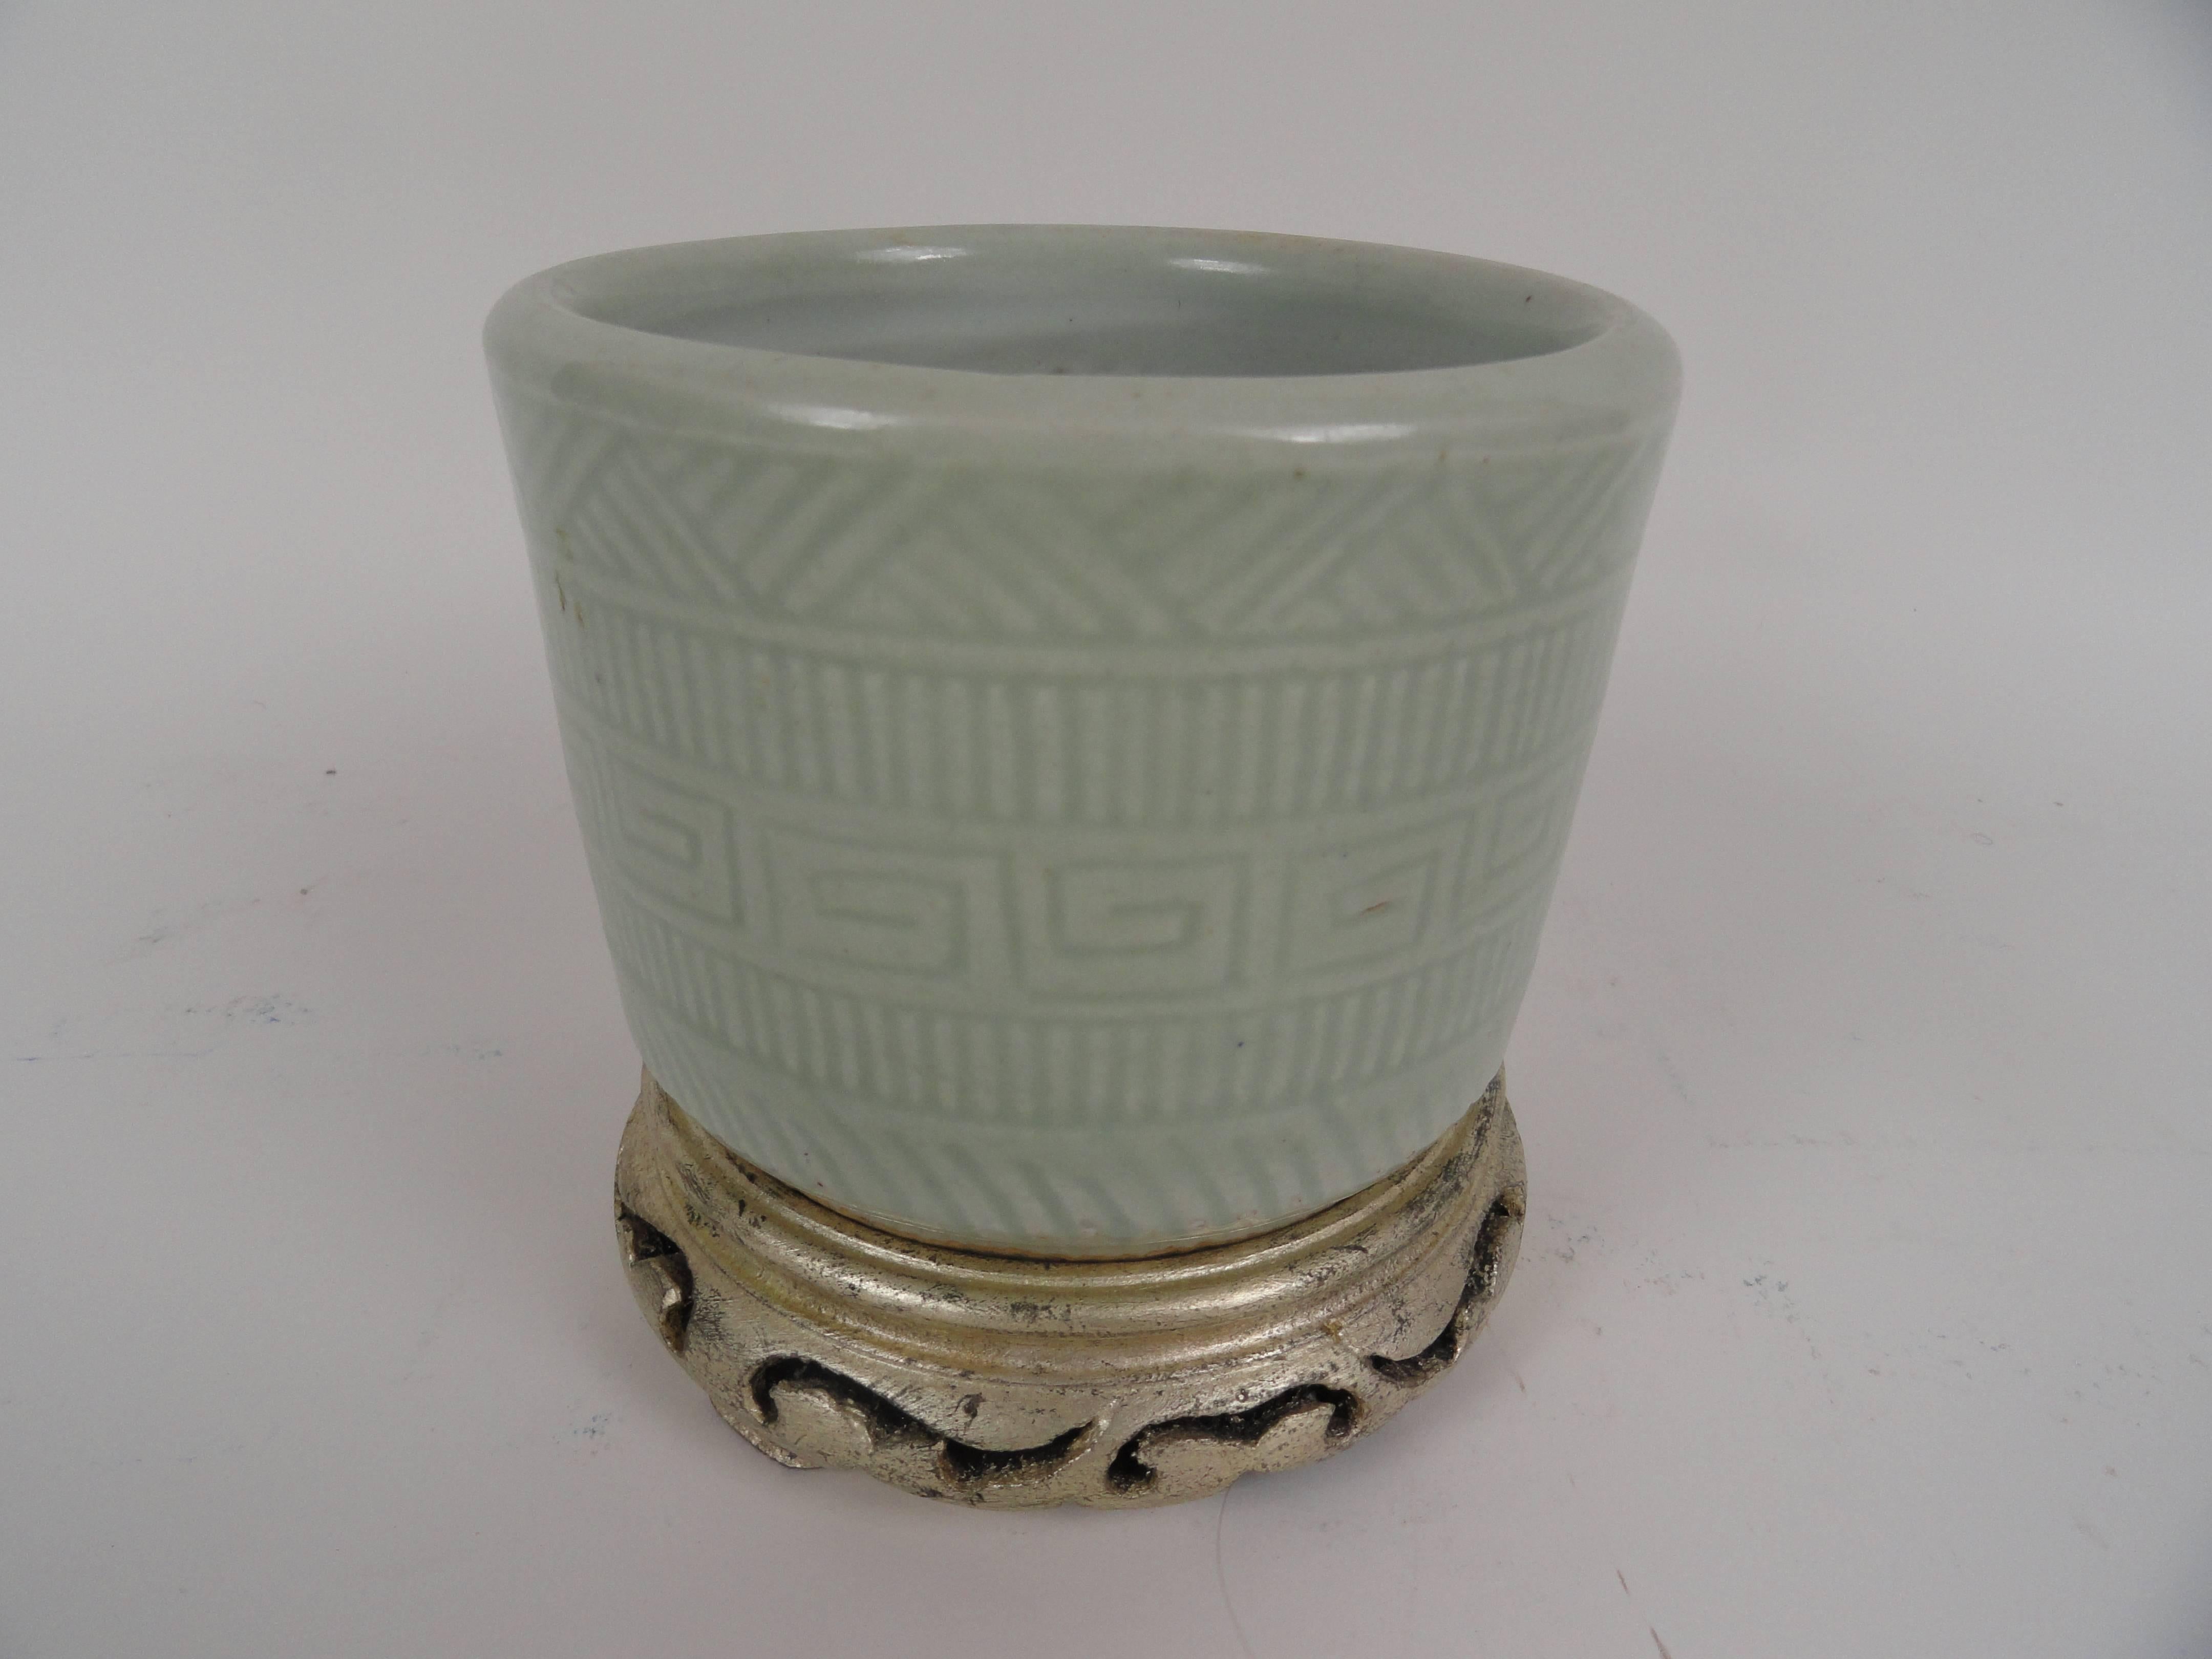 19th century Chinese porcelain brush pot in soft celadon. Rests on custom silver leaf teak base.